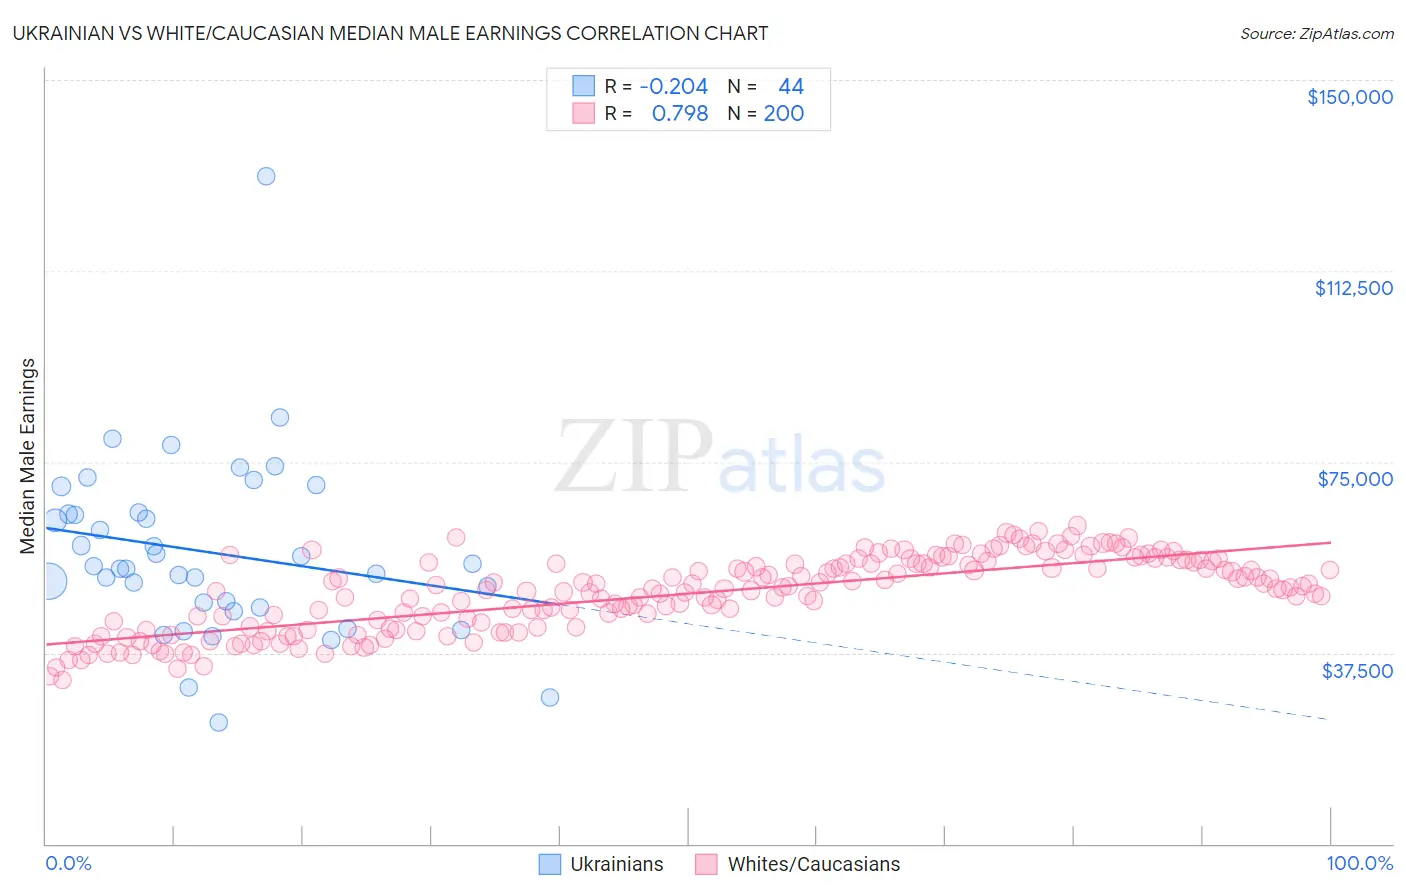 Ukrainian vs White/Caucasian Median Male Earnings